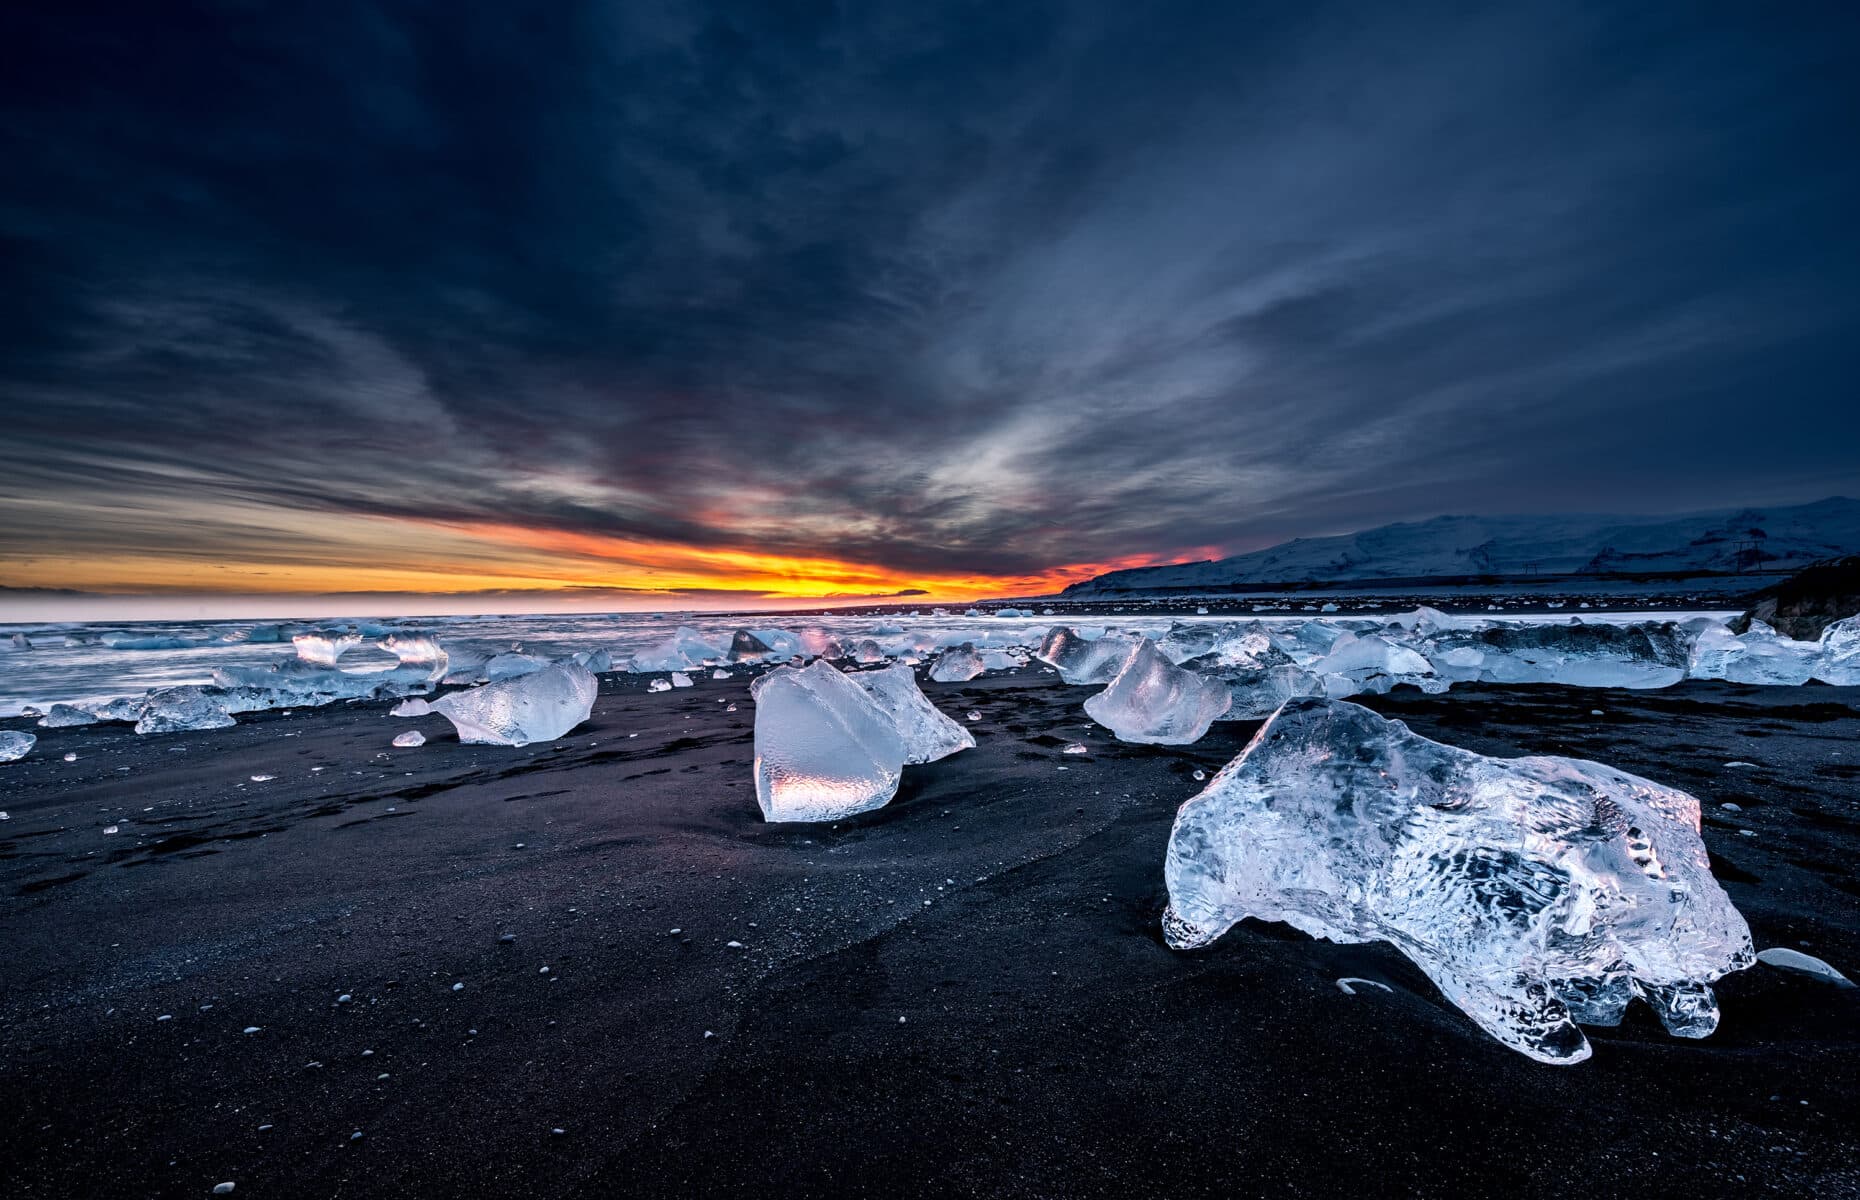 Diamond beach in Iceland